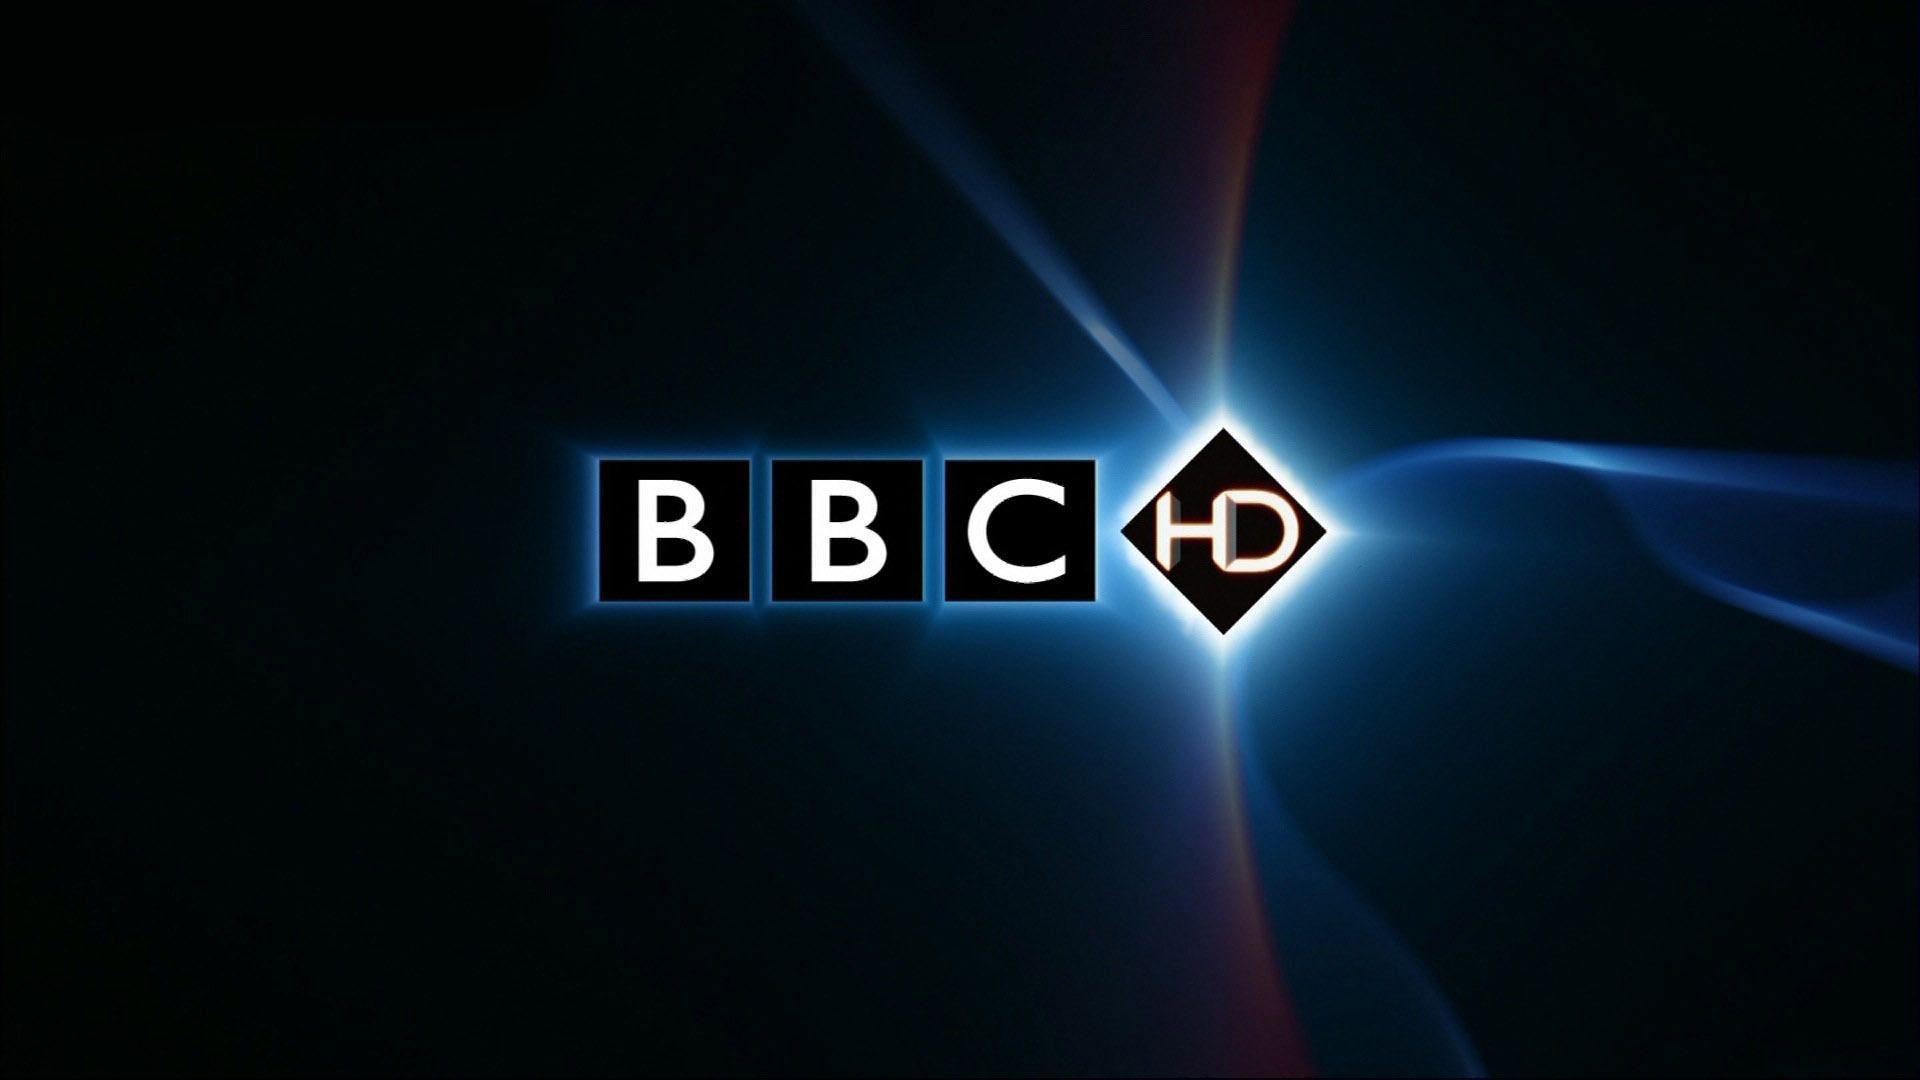 Bbc Television Channel Logo HD Divine Wallpaper Free